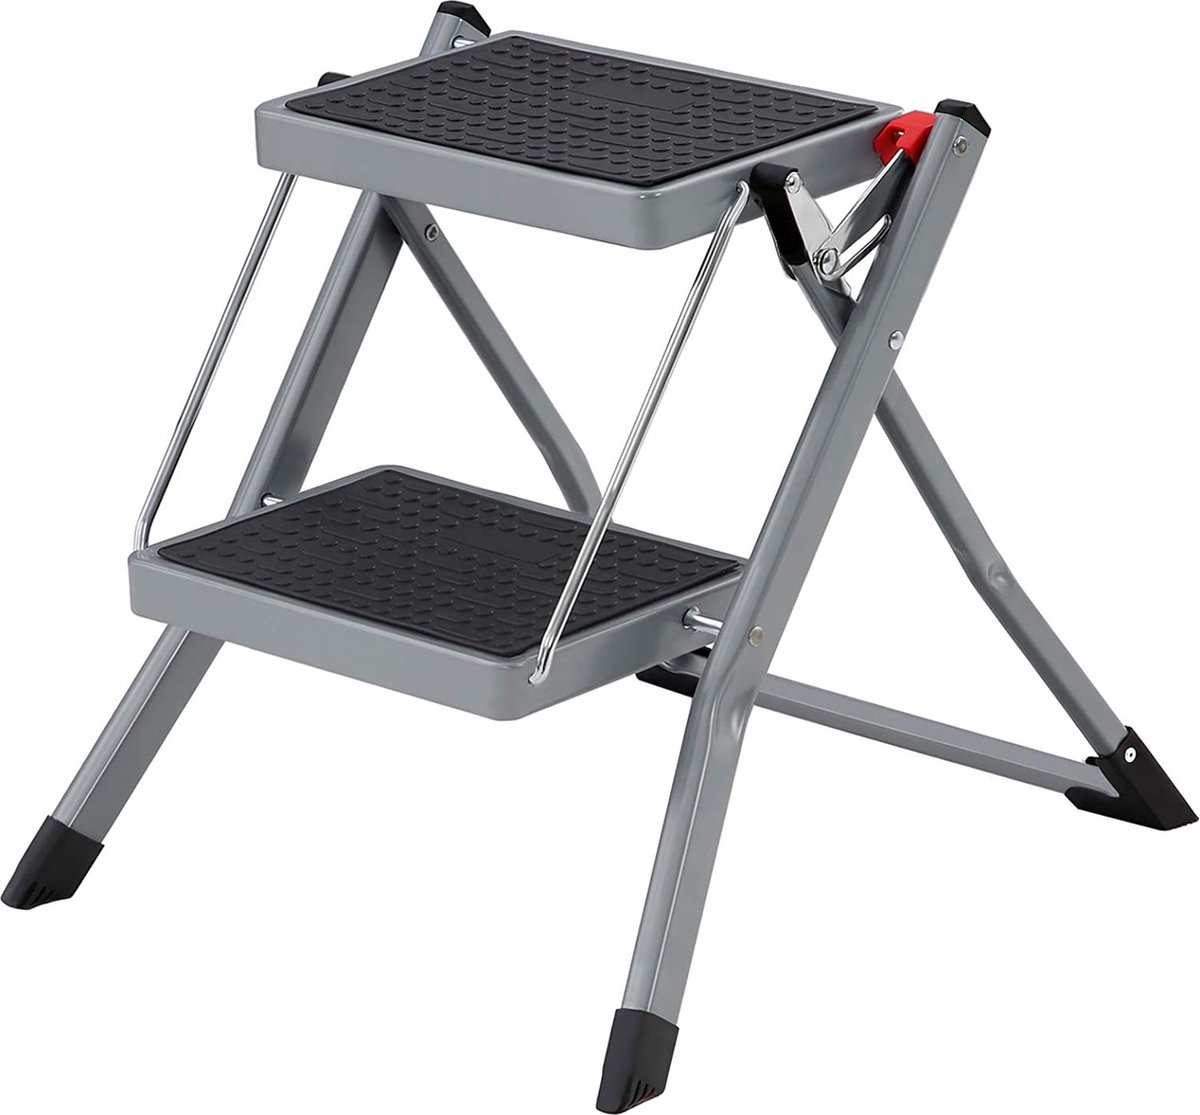 sporten ladder, vouwladder, sportbreedte 20 cm, antislip rubber, met handvat, draagvermogen 150 kg, staal, grijs en zwart GSL002GY01